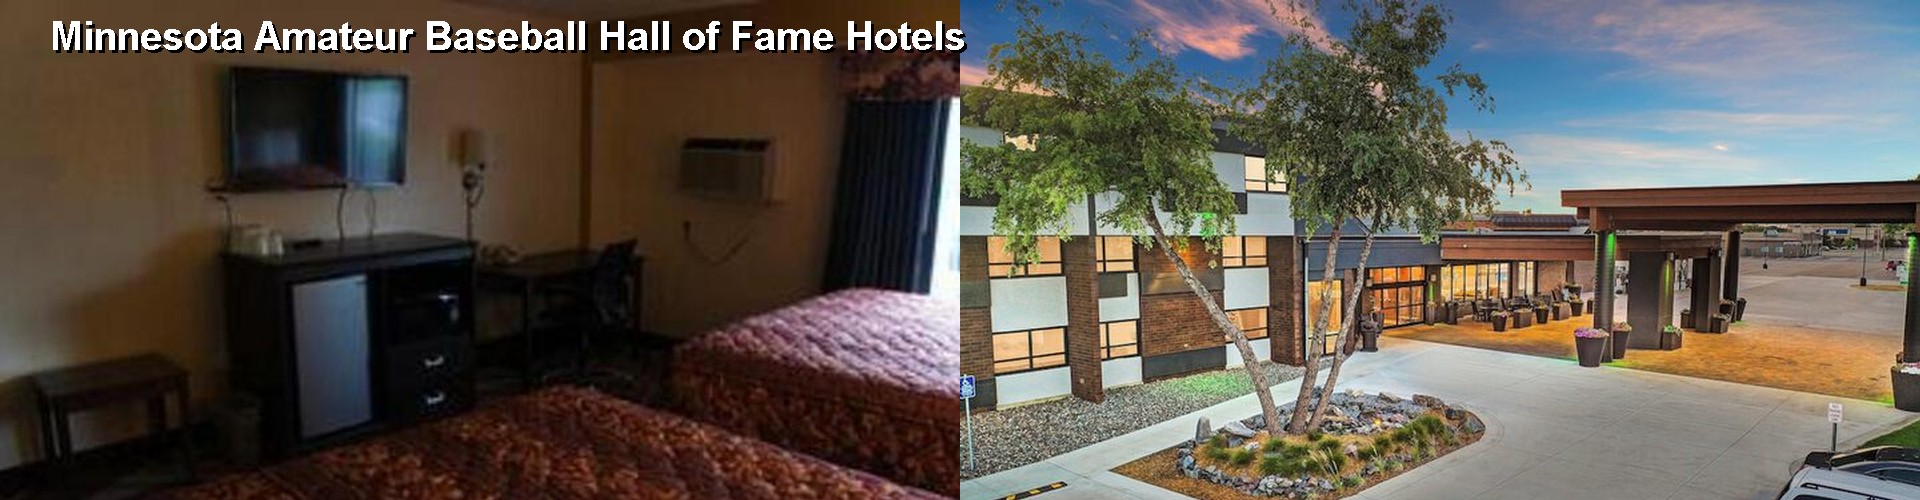 5 Best Hotels near Minnesota Amateur Baseball Hall of Fame